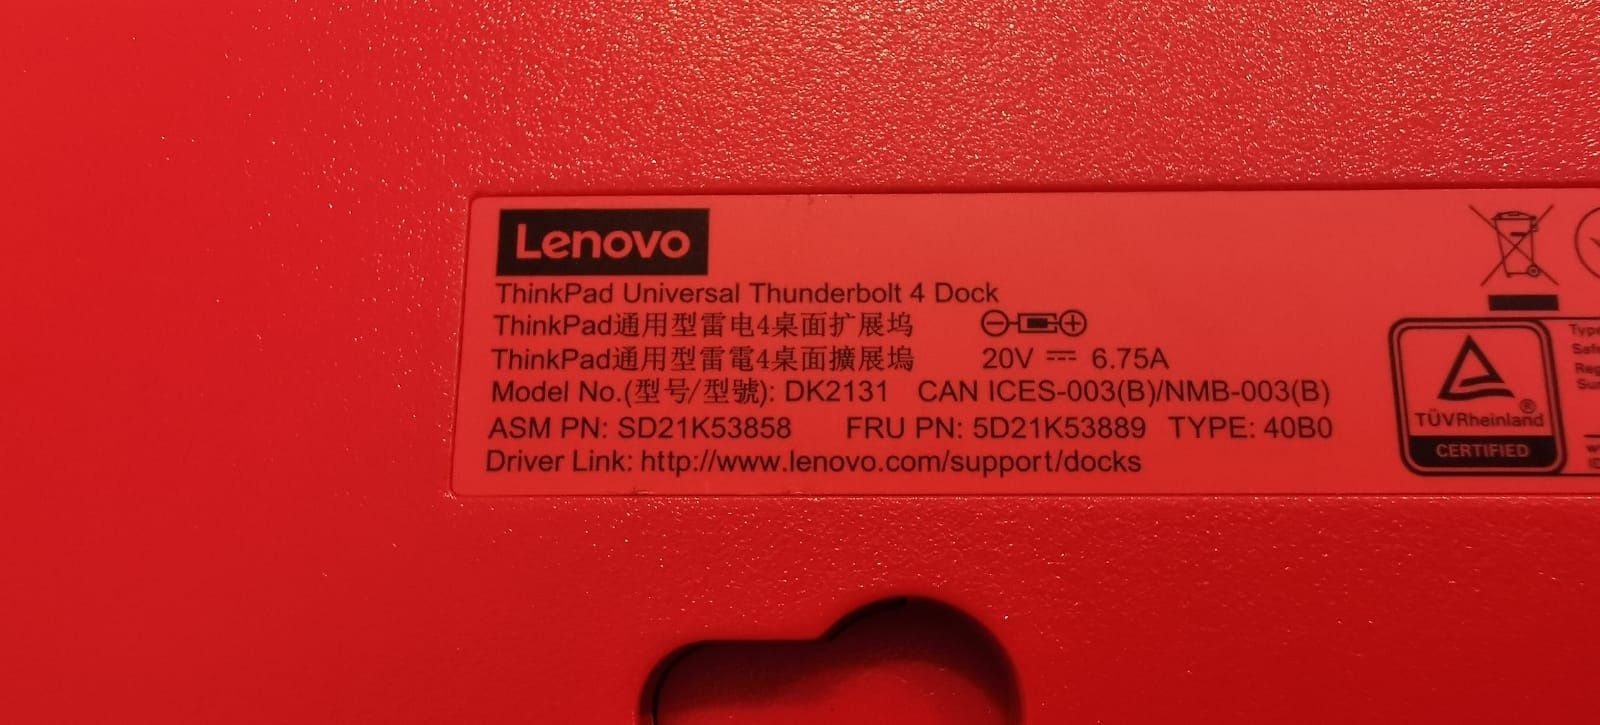 Stacja dokująca Lenovo thinkpad universal thunderbolt 4 dock